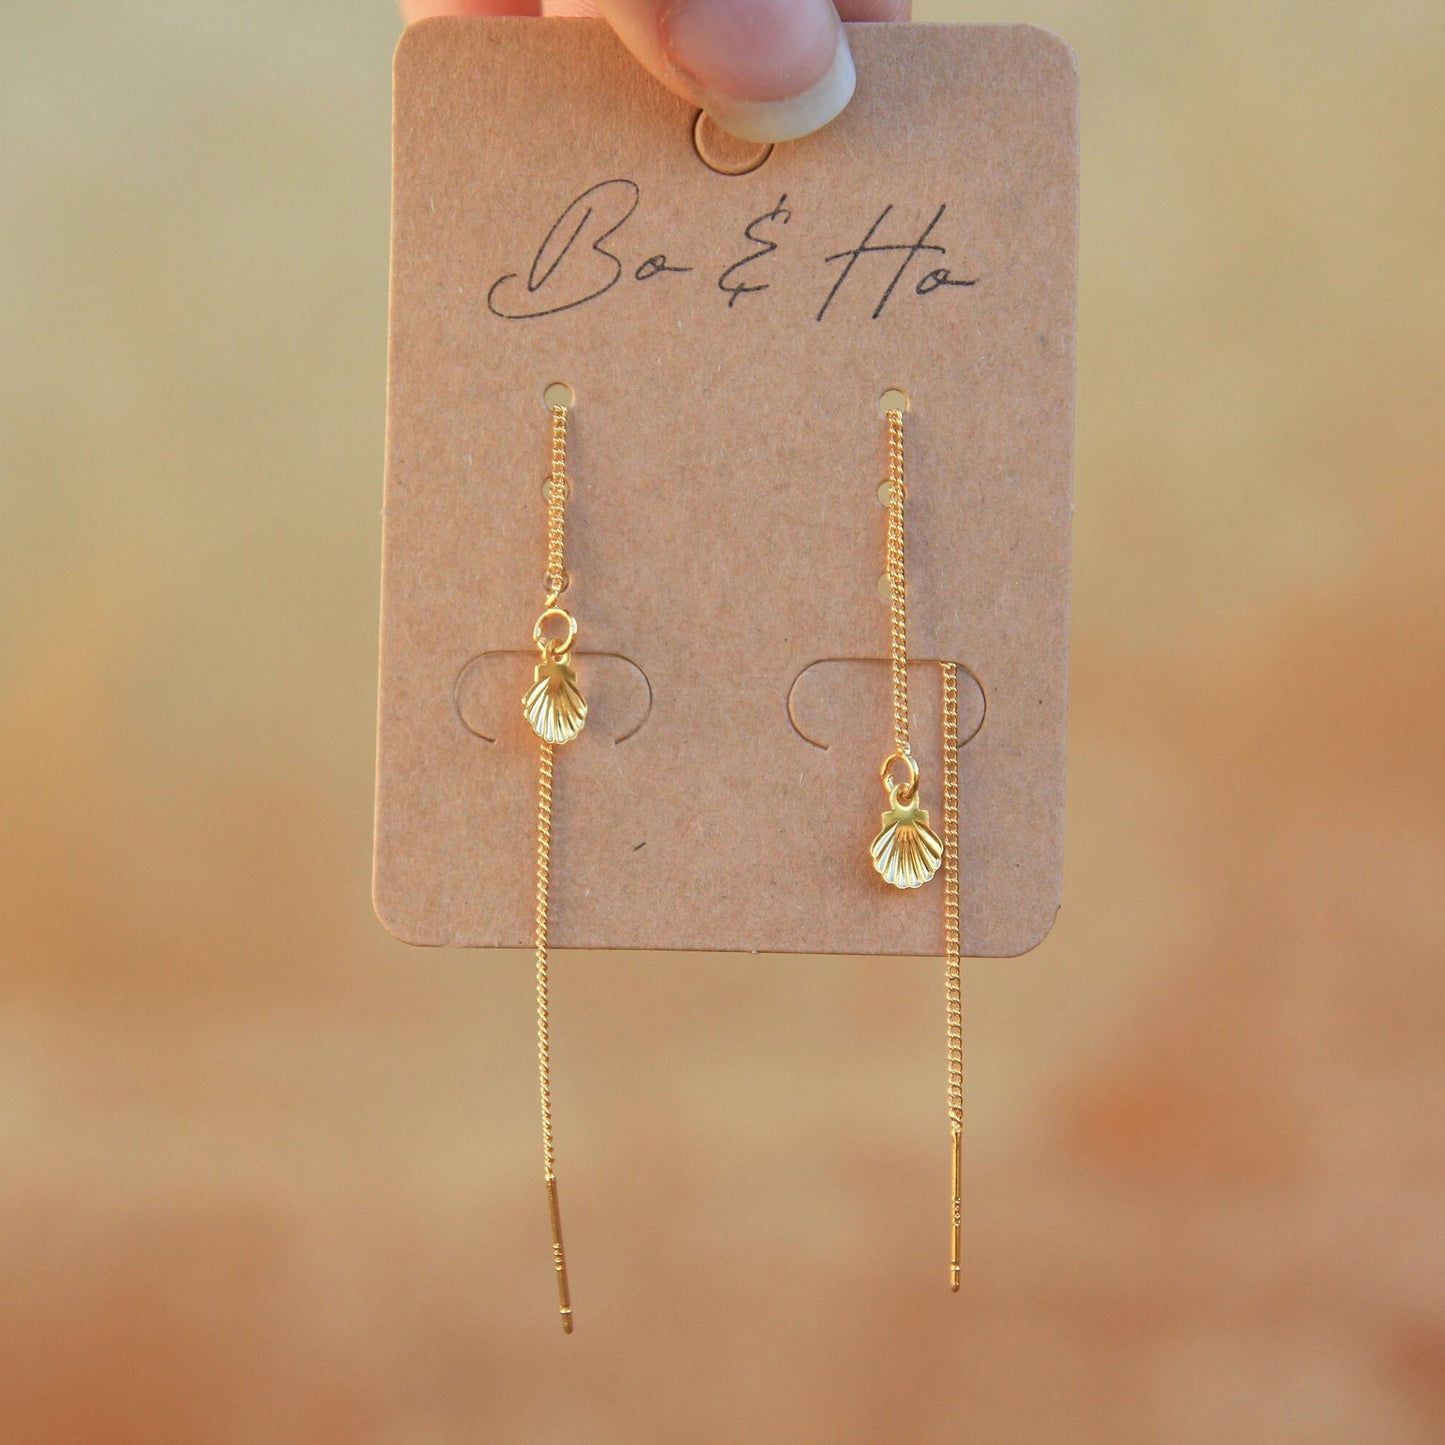 Minimalist Shell Threader Earrings / Delicate Tiny Sea Shell Dangly Earrings